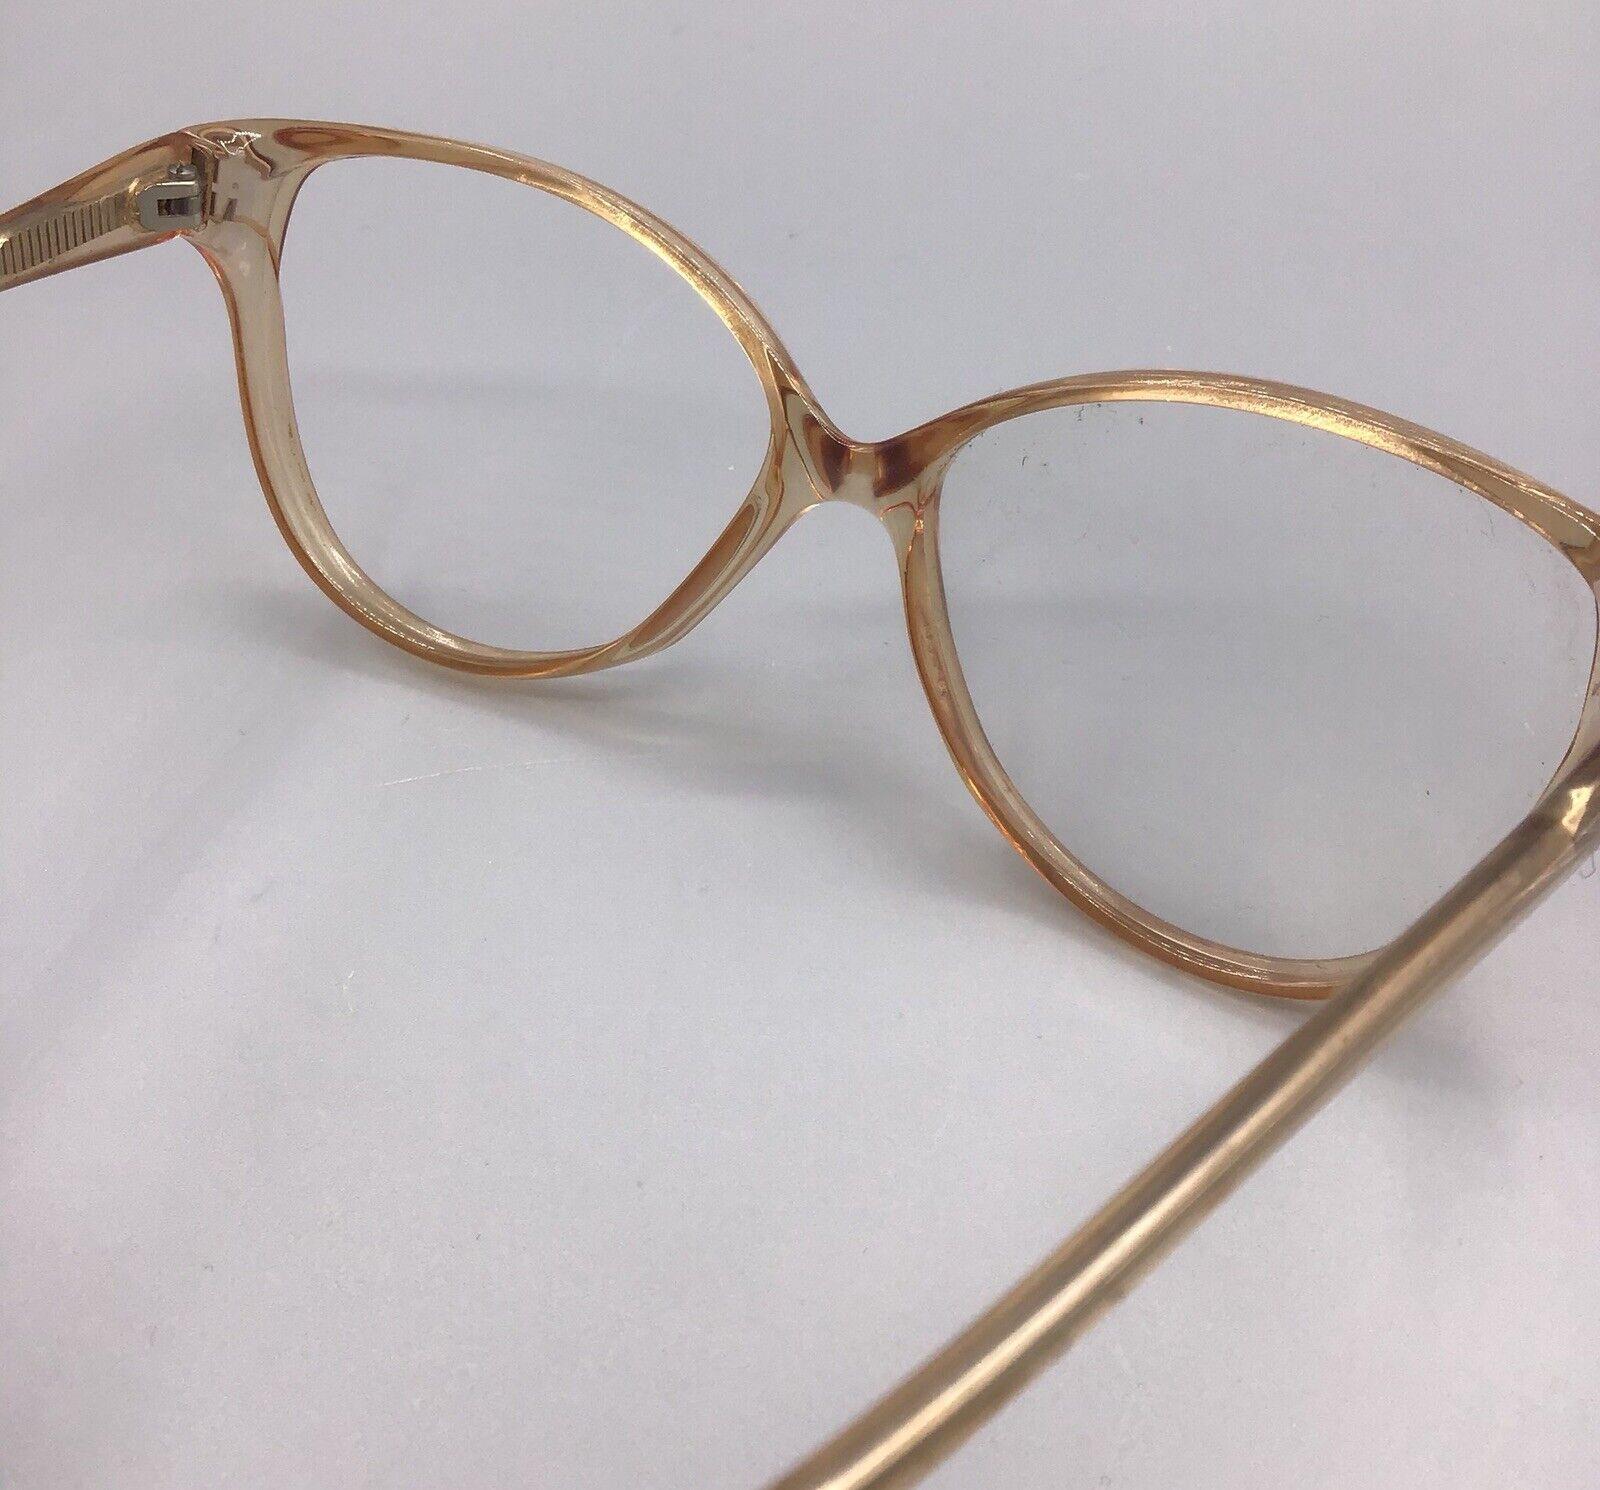 Safilo occhiale vintage eyewear contempora 801 345 brillen lunettes